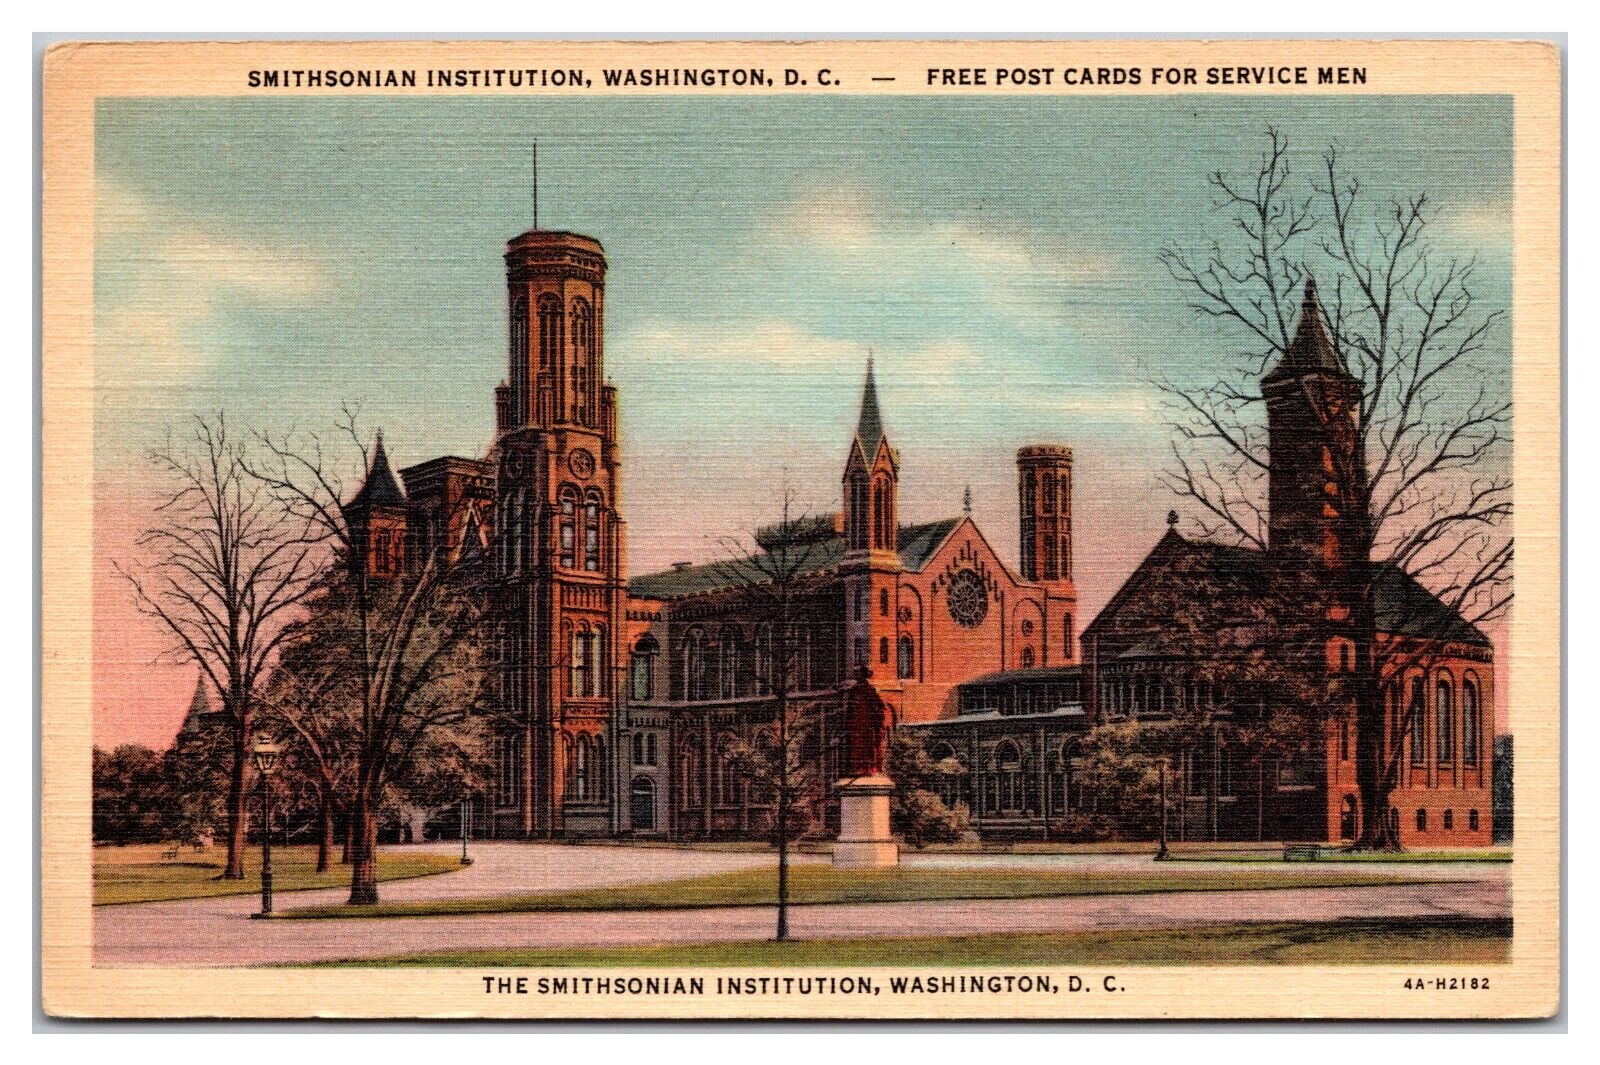 Smithsonian Institution, Washington, D.C. Postcard